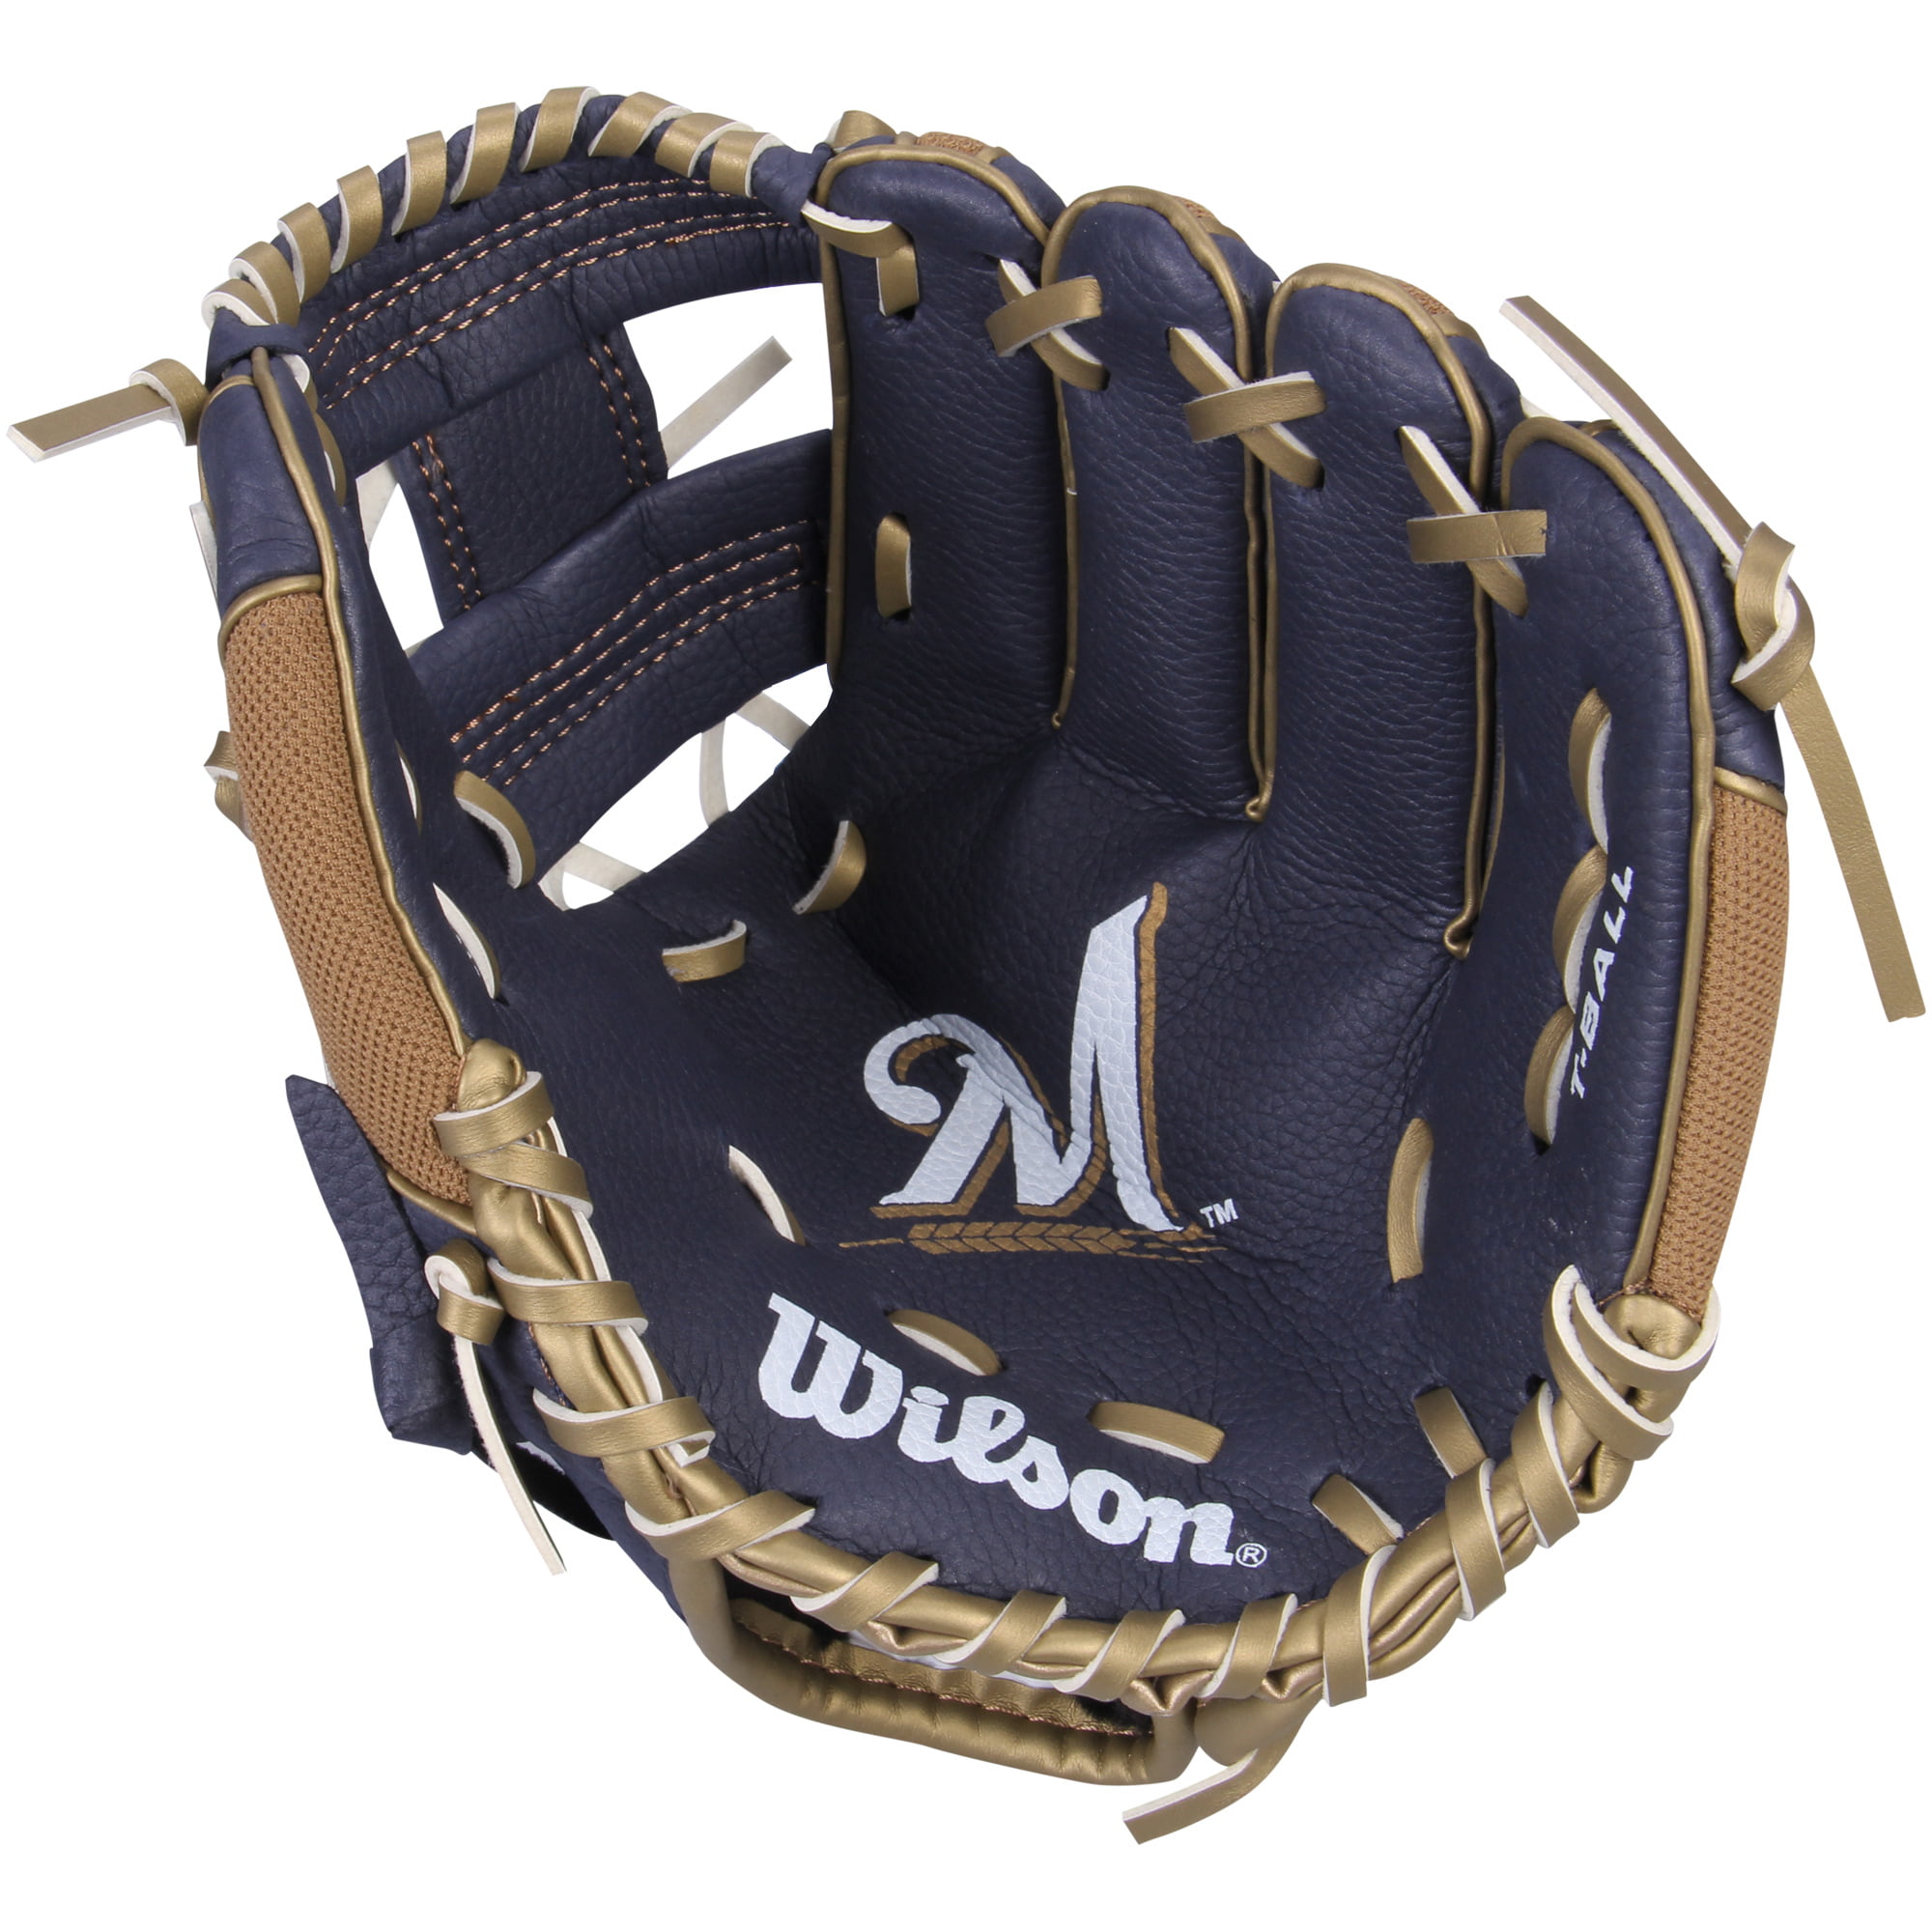 Wilson Tee Ball Baseball Glove A200 Milwaukee Brewers 10 Inches RHT for sale online 